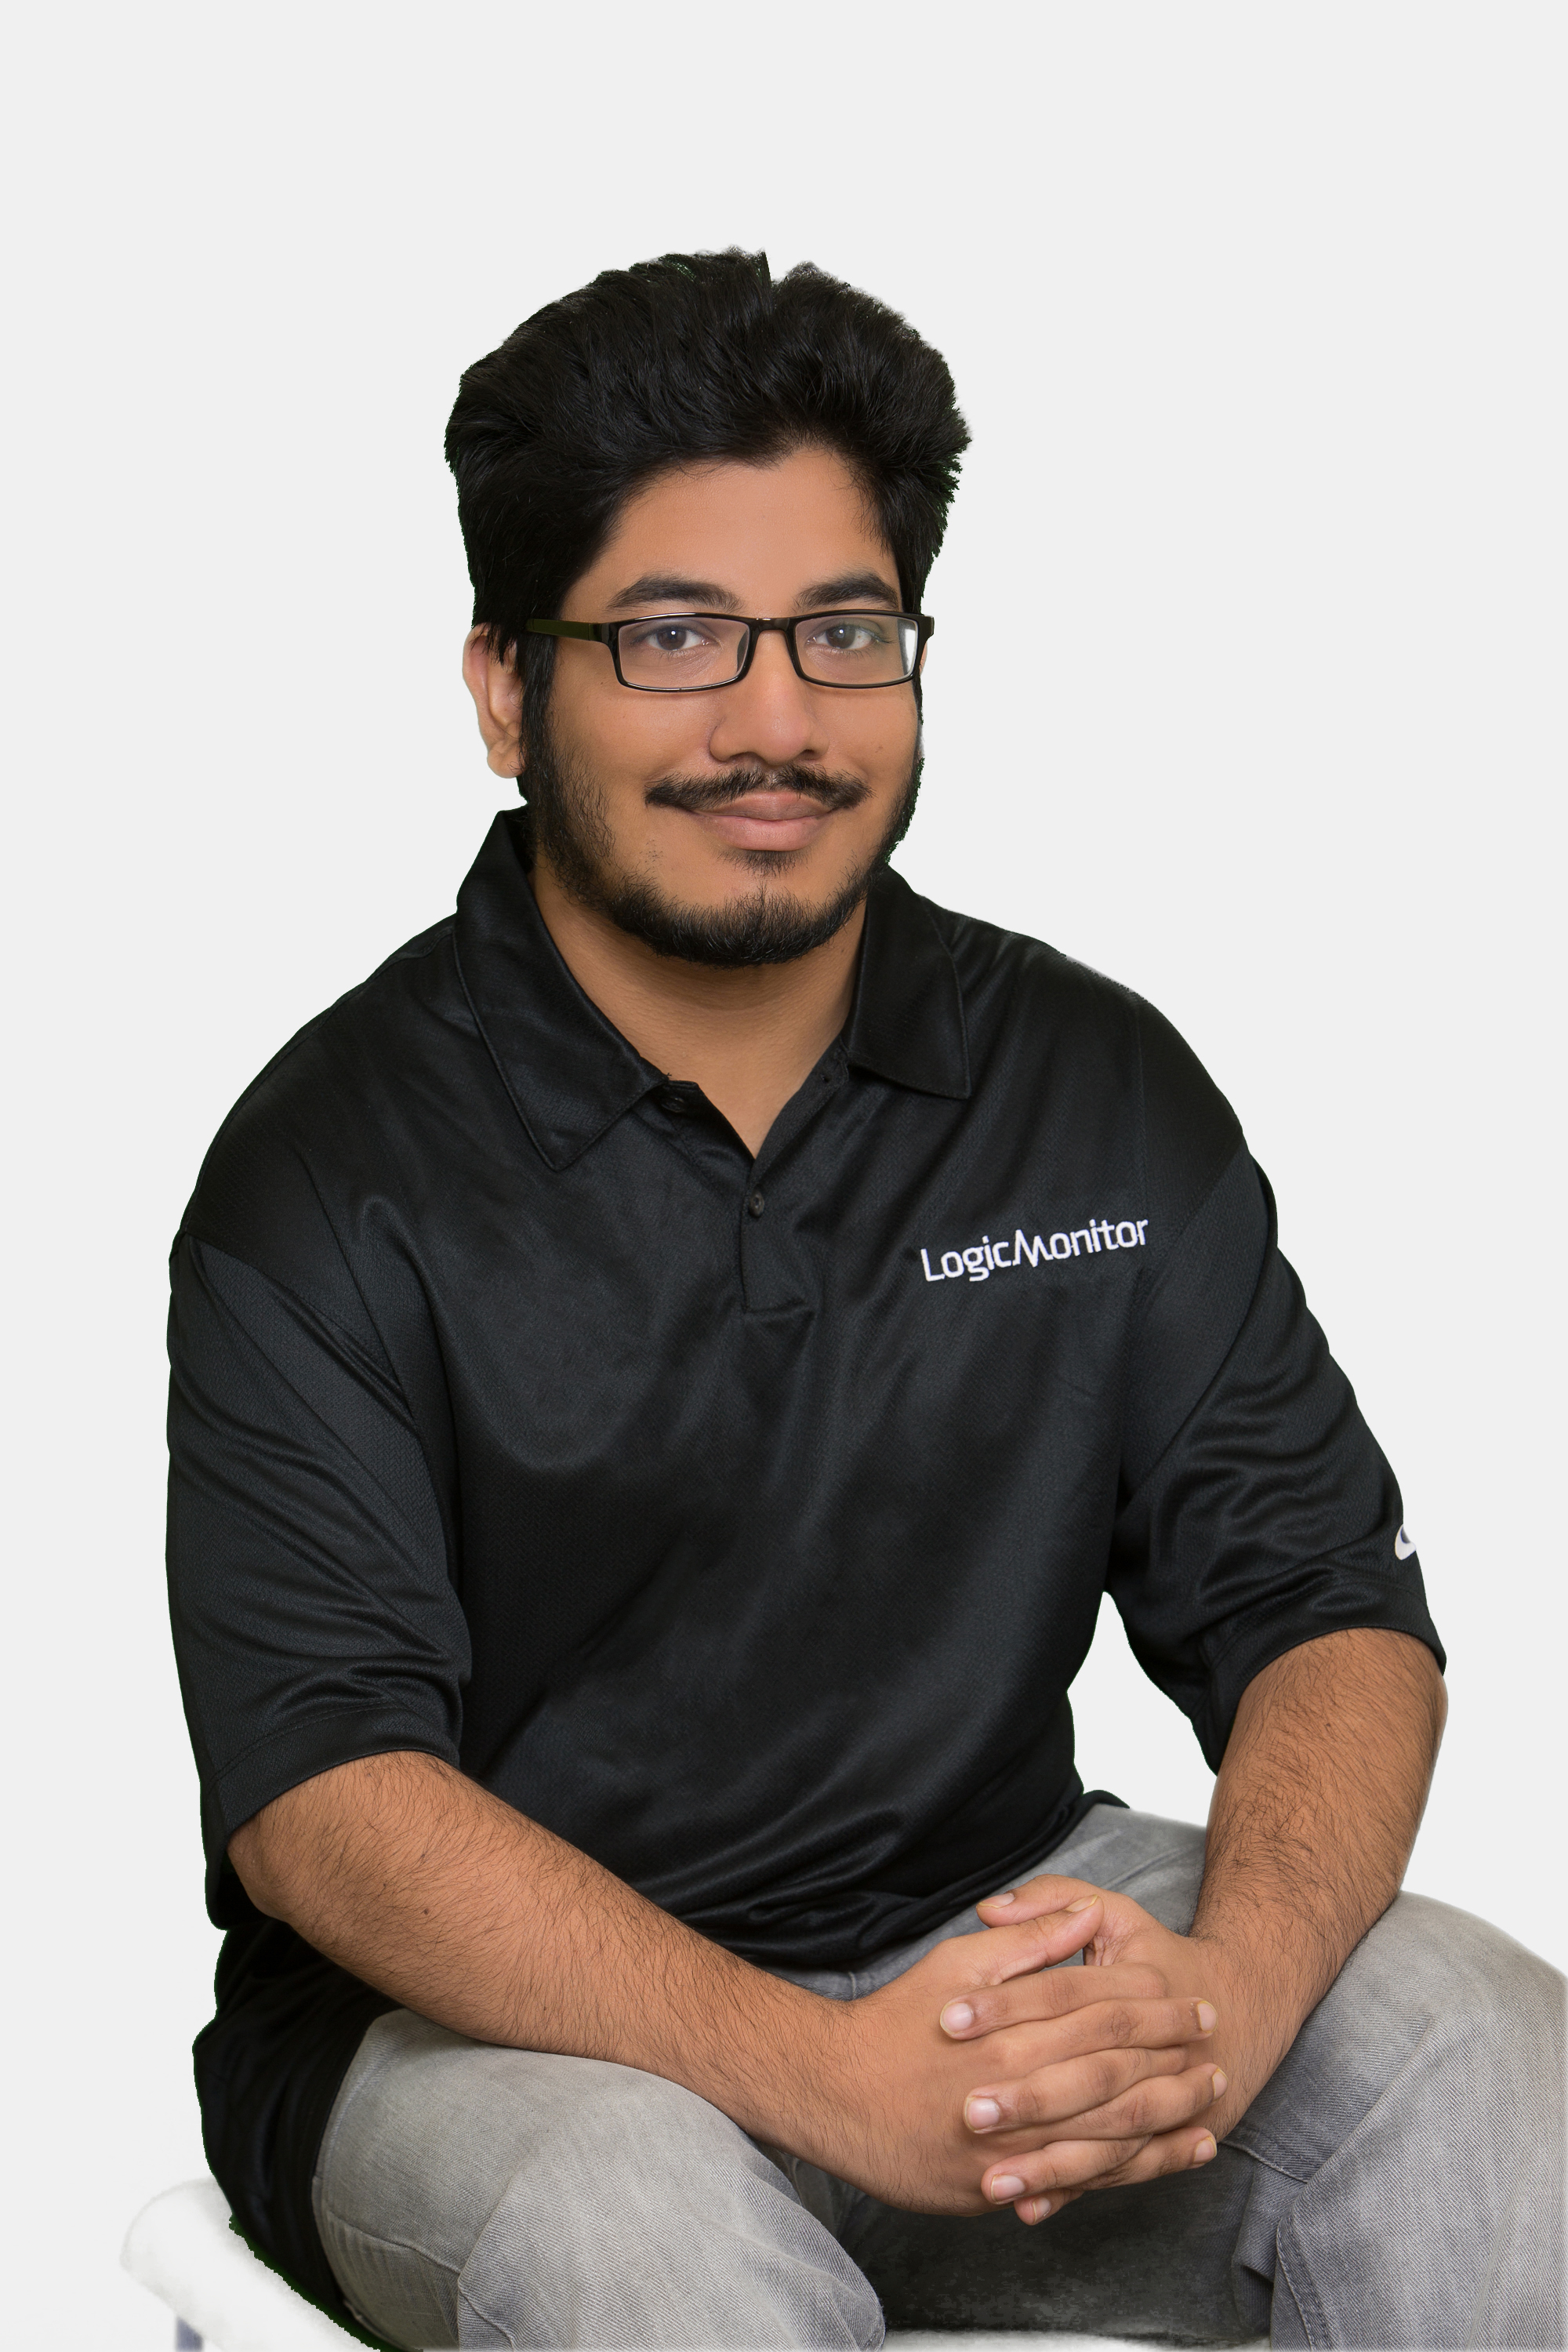 Tahmid Nabi is a Sr. Software Engineer in Santa Barbara, CA at LogicMonitor